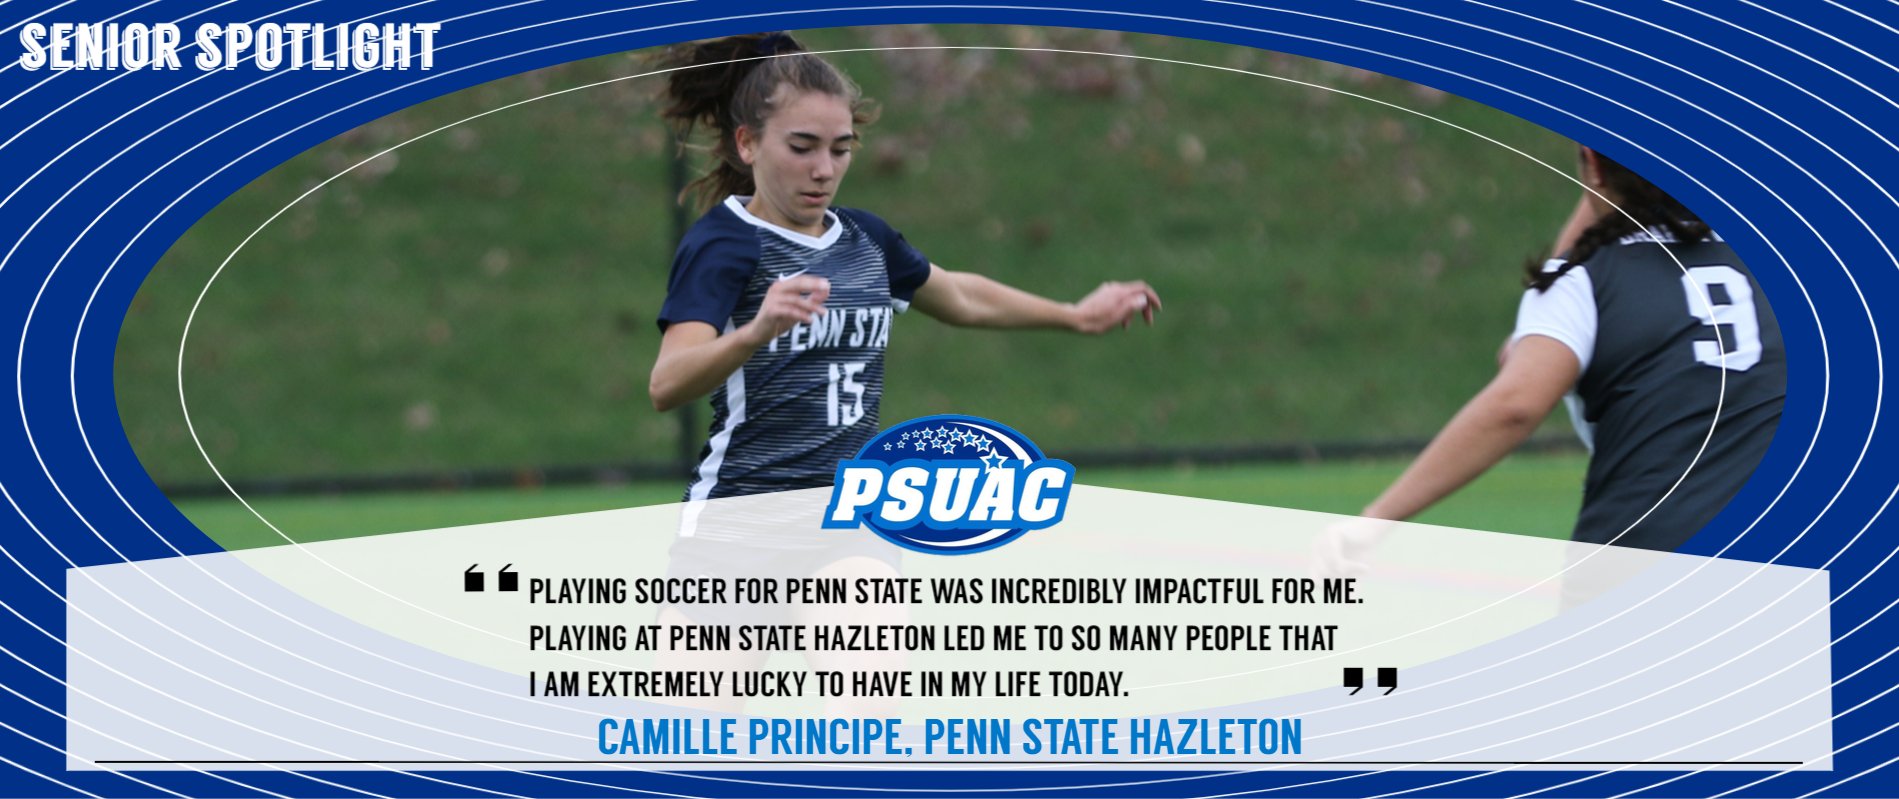 Penn State Hazleton's Camille Principe.